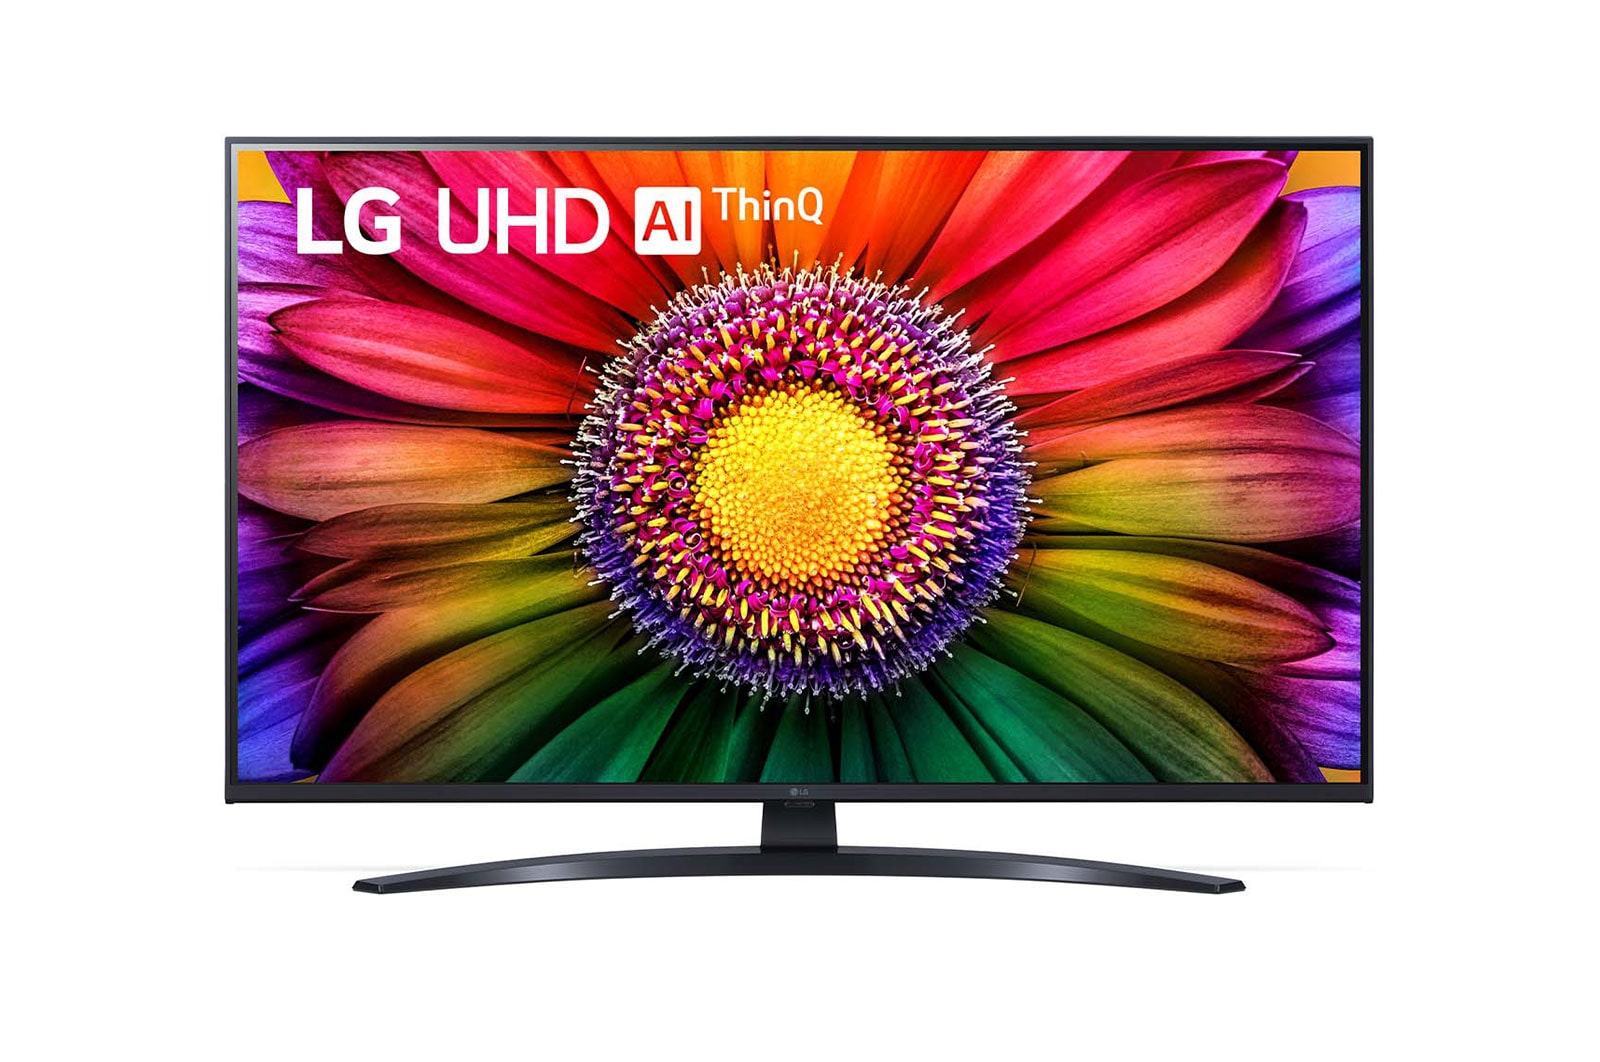 LG UR81 43 inch 4K Smart UHD TV with Al Sound Pro, 43UR81006LJ